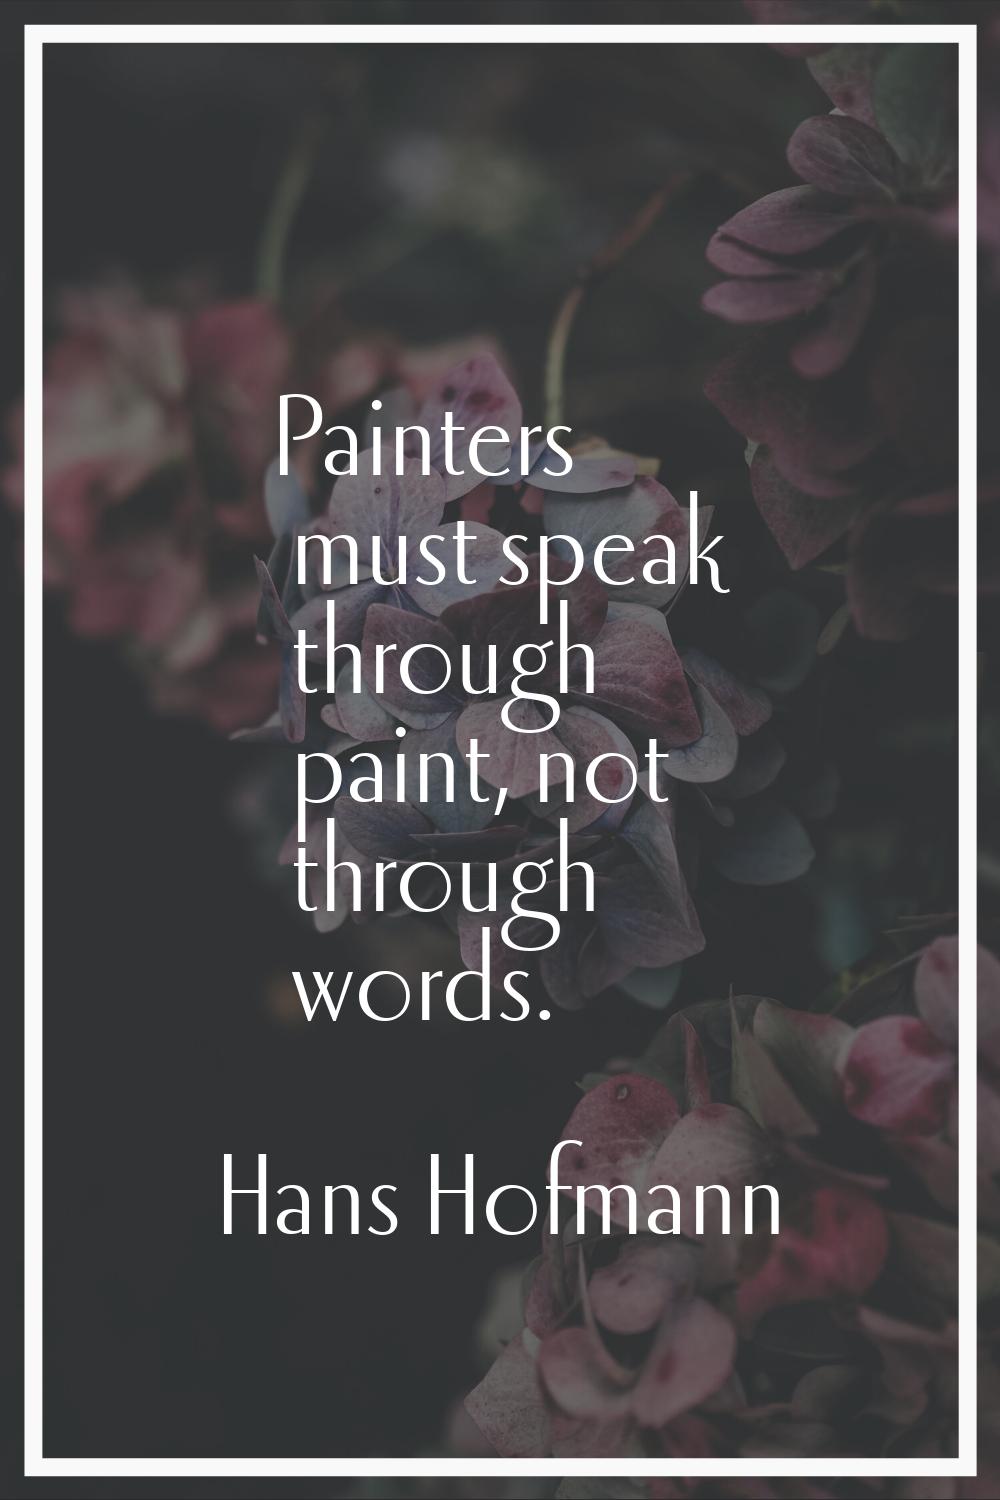 Painters must speak through paint, not through words.